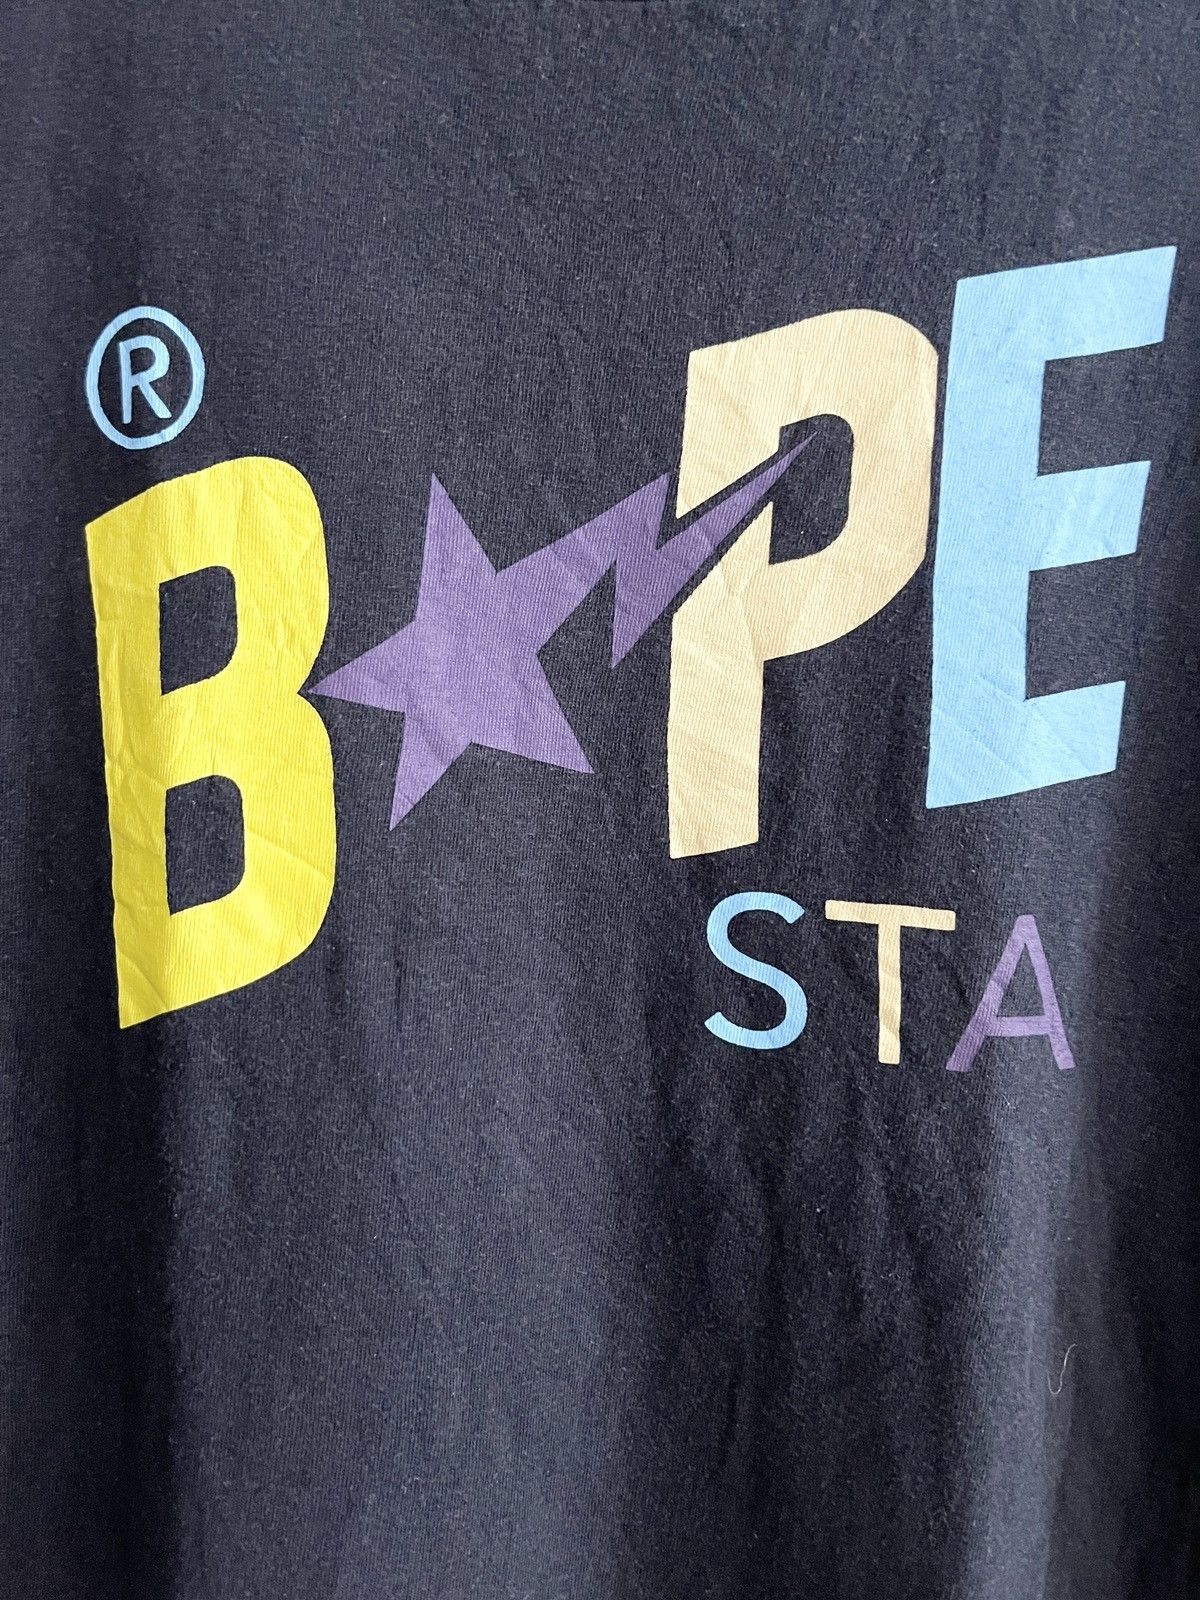 Bape Purple Star Bapesta Tee (L) - 4